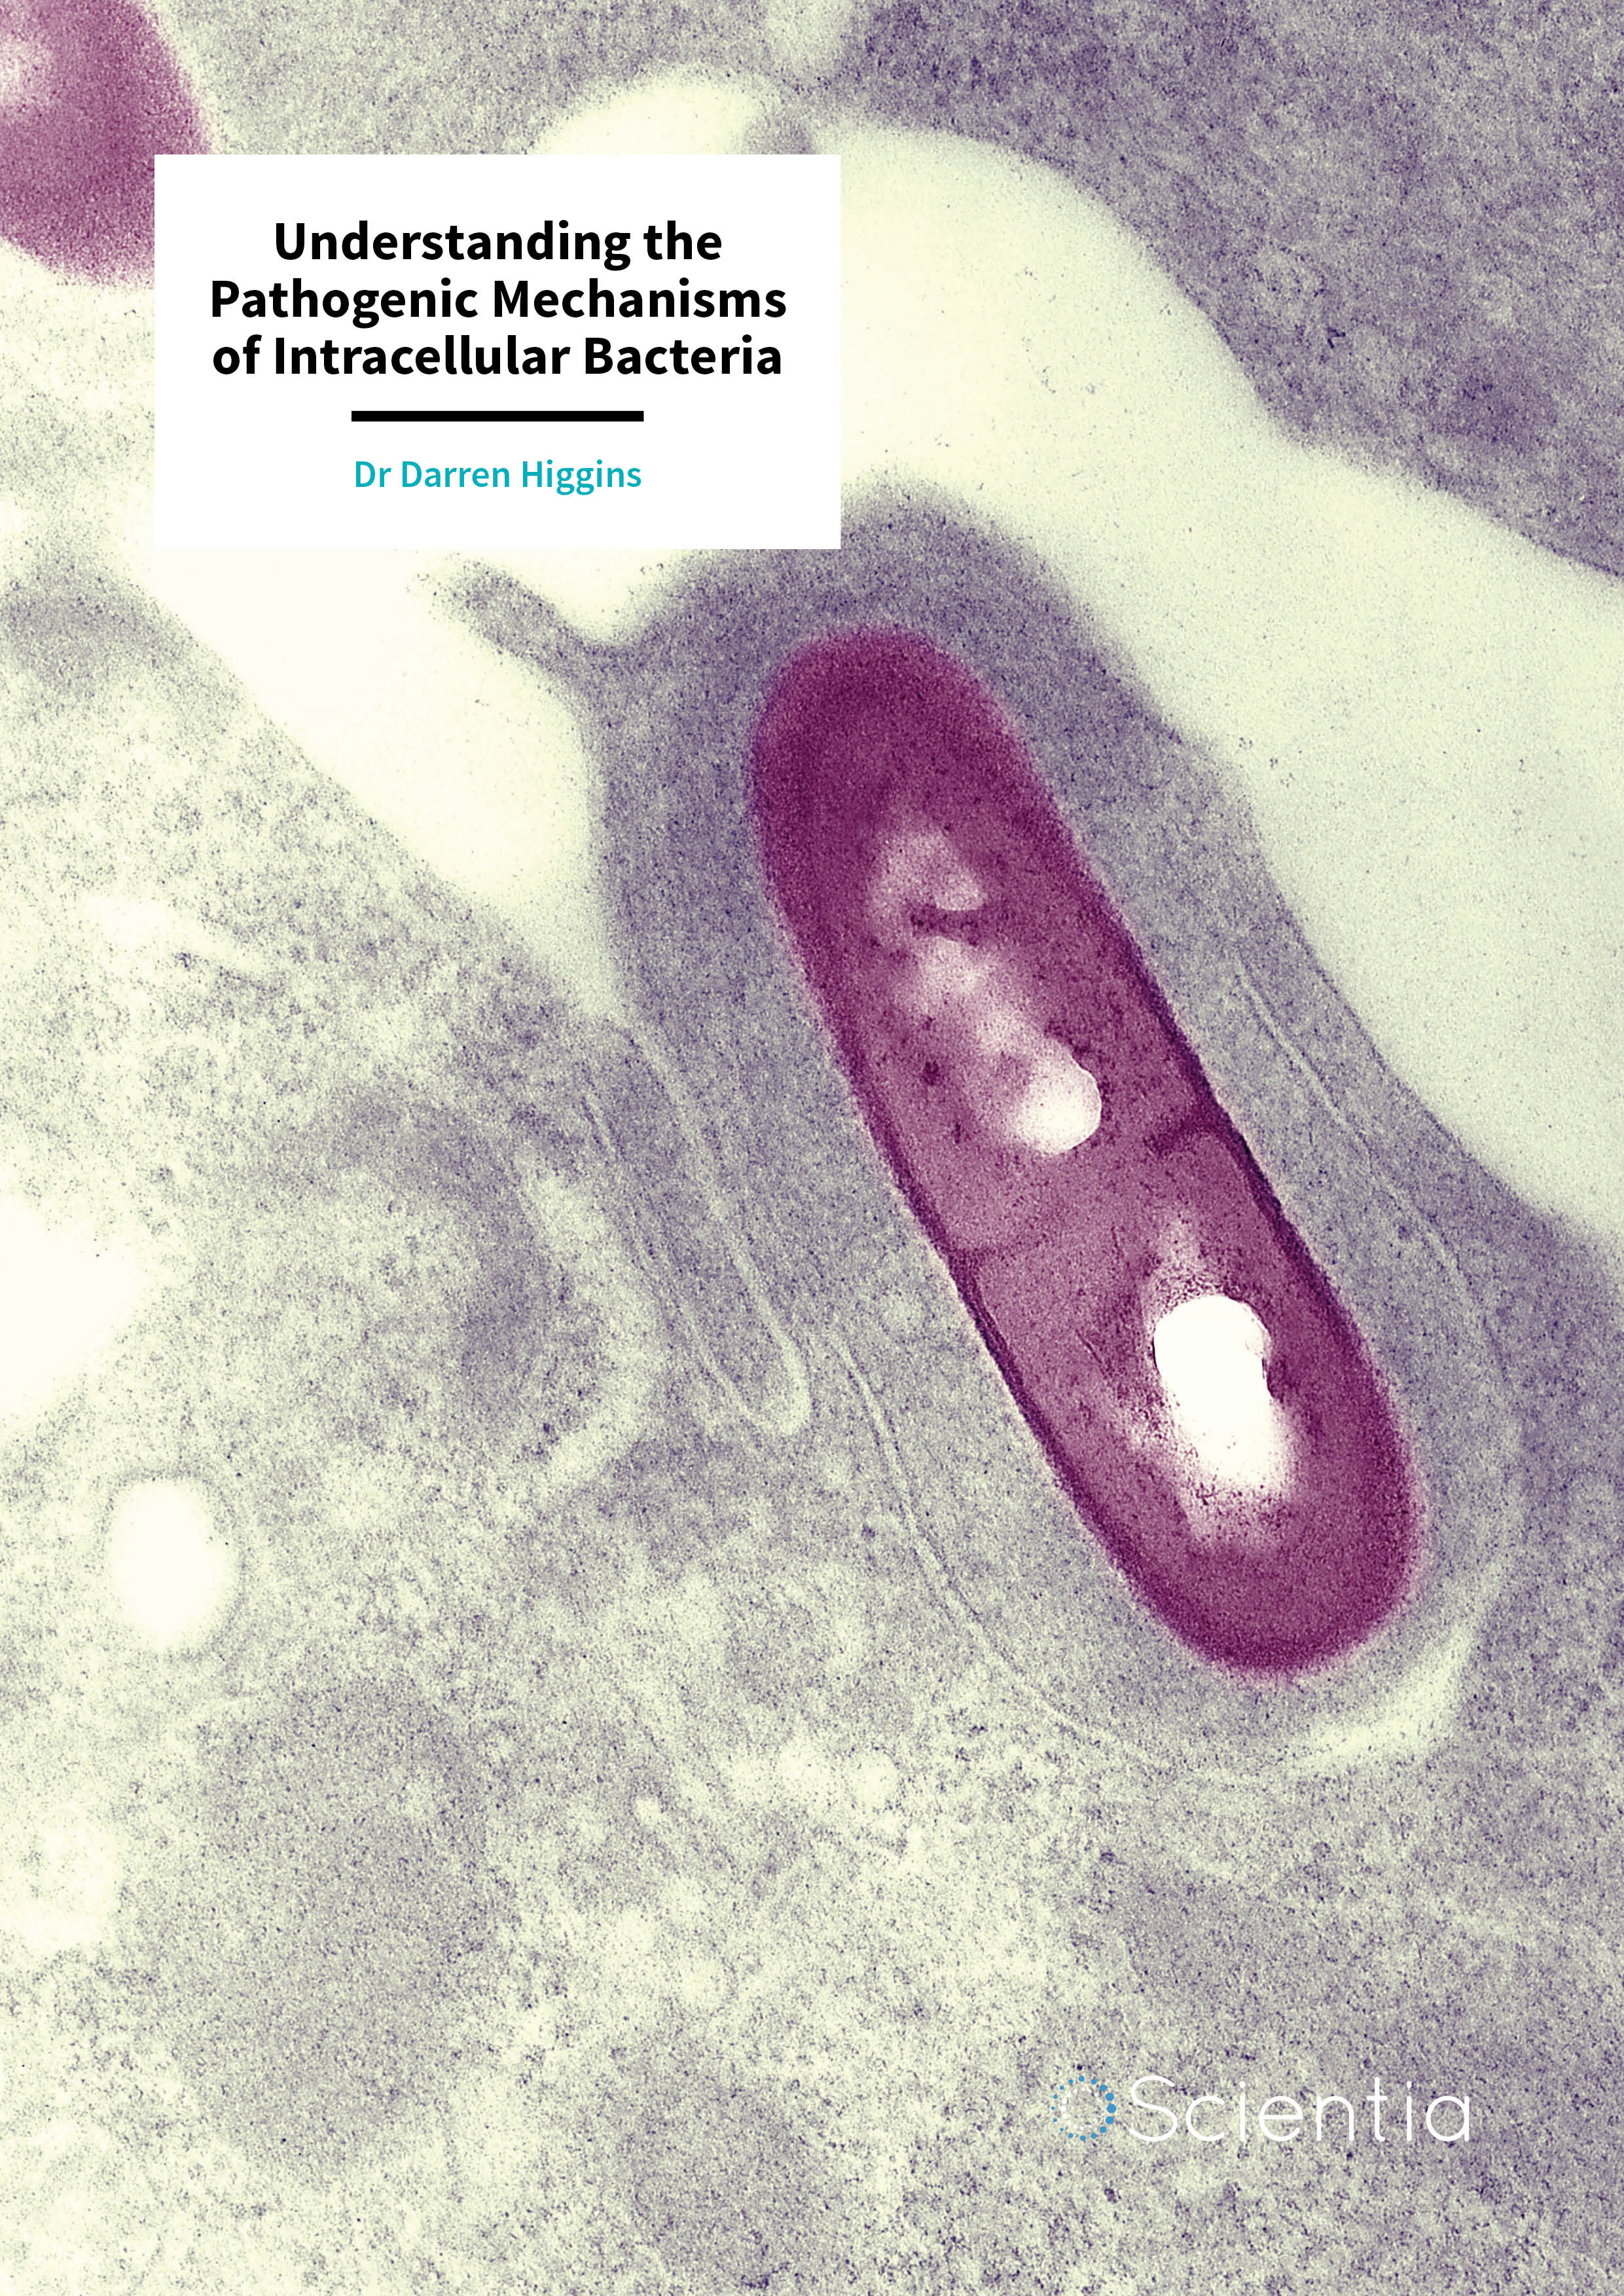 Dr Darren Higgins – Understanding the Pathogenic Mechanisms of Intracellular Bacteria